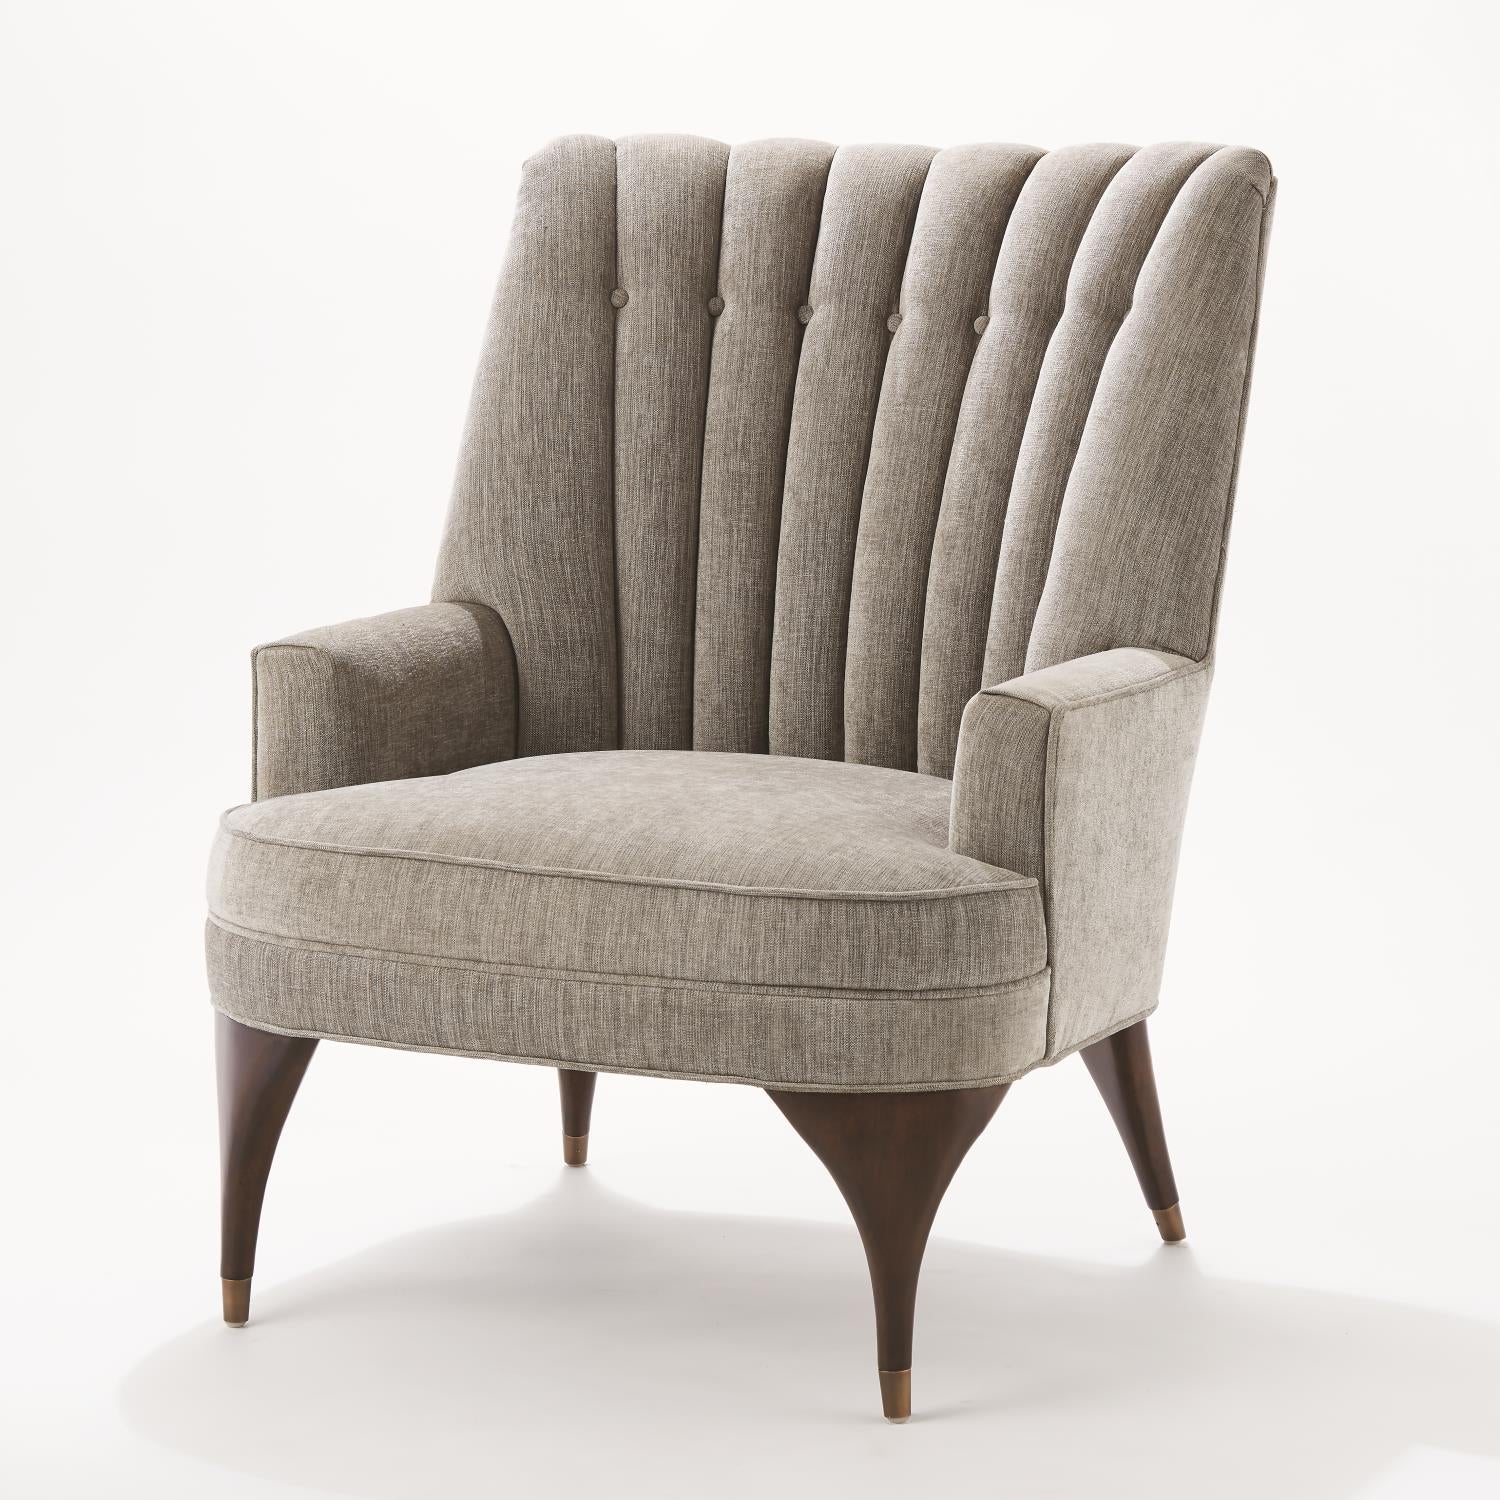 Duncan Chair - Silversmith Fabric - Grats Decor Interior Design & Build Inc.